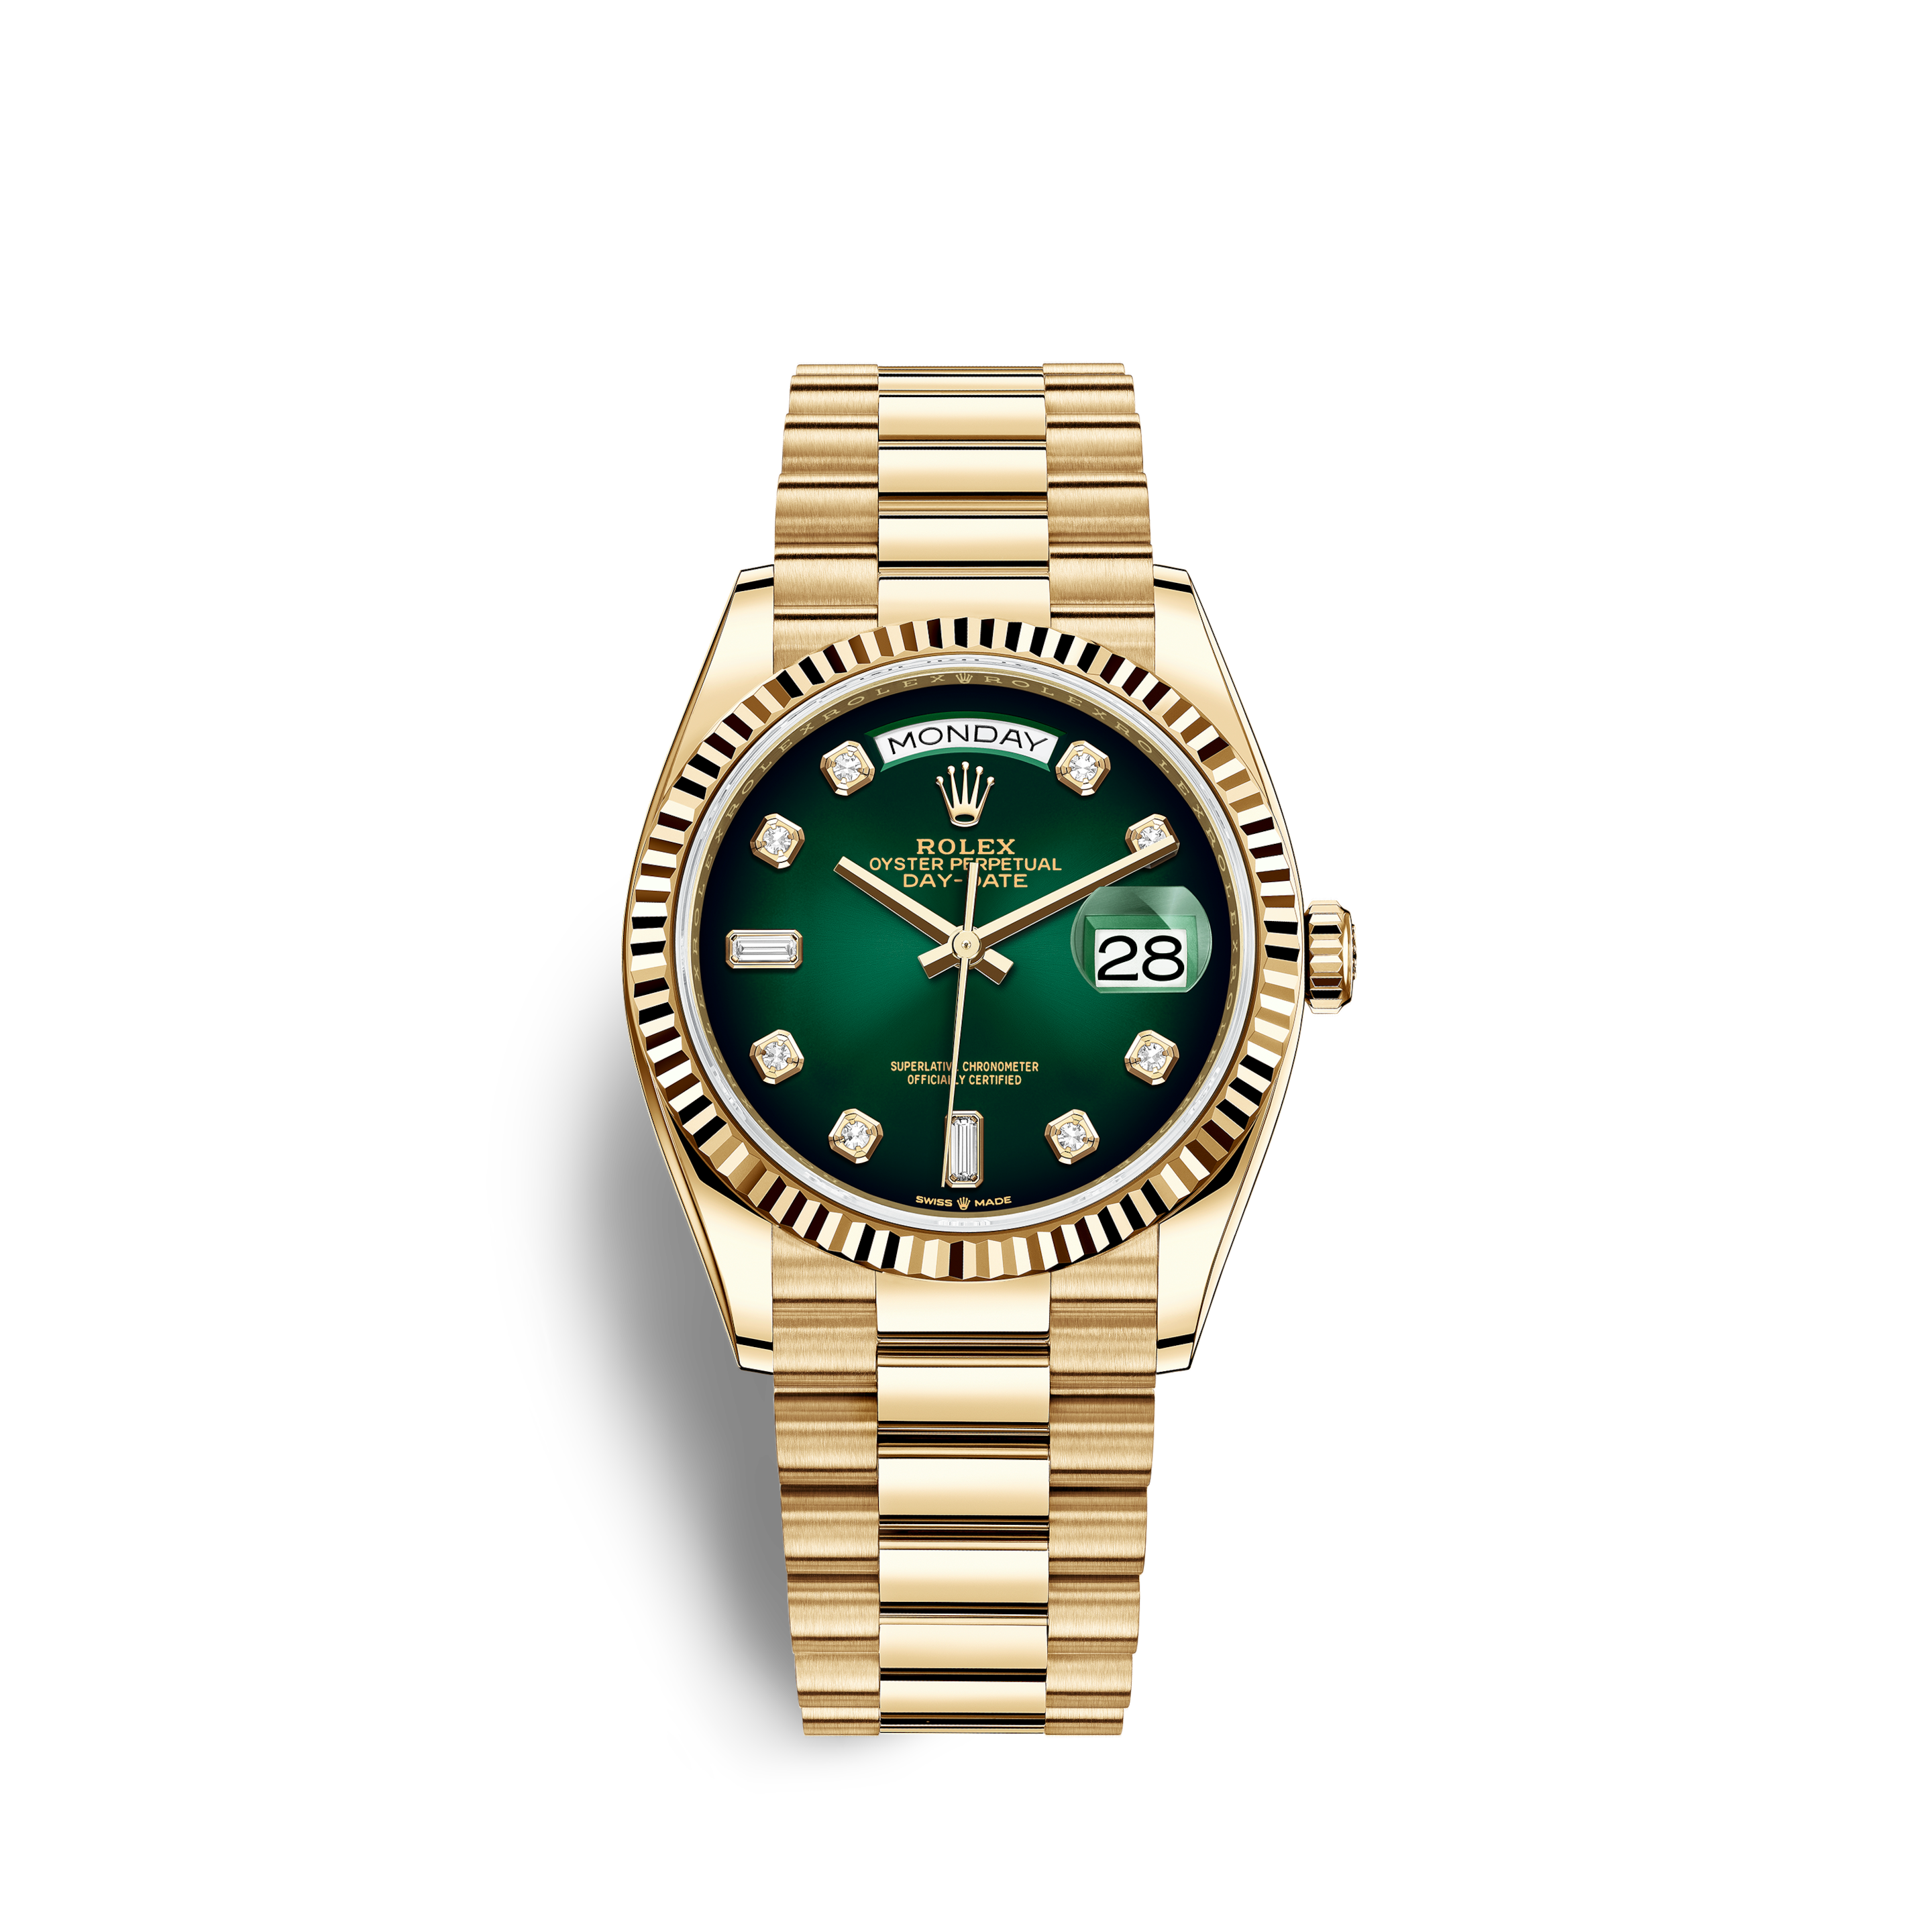 Rolex Day-Date - La montre de prestige 